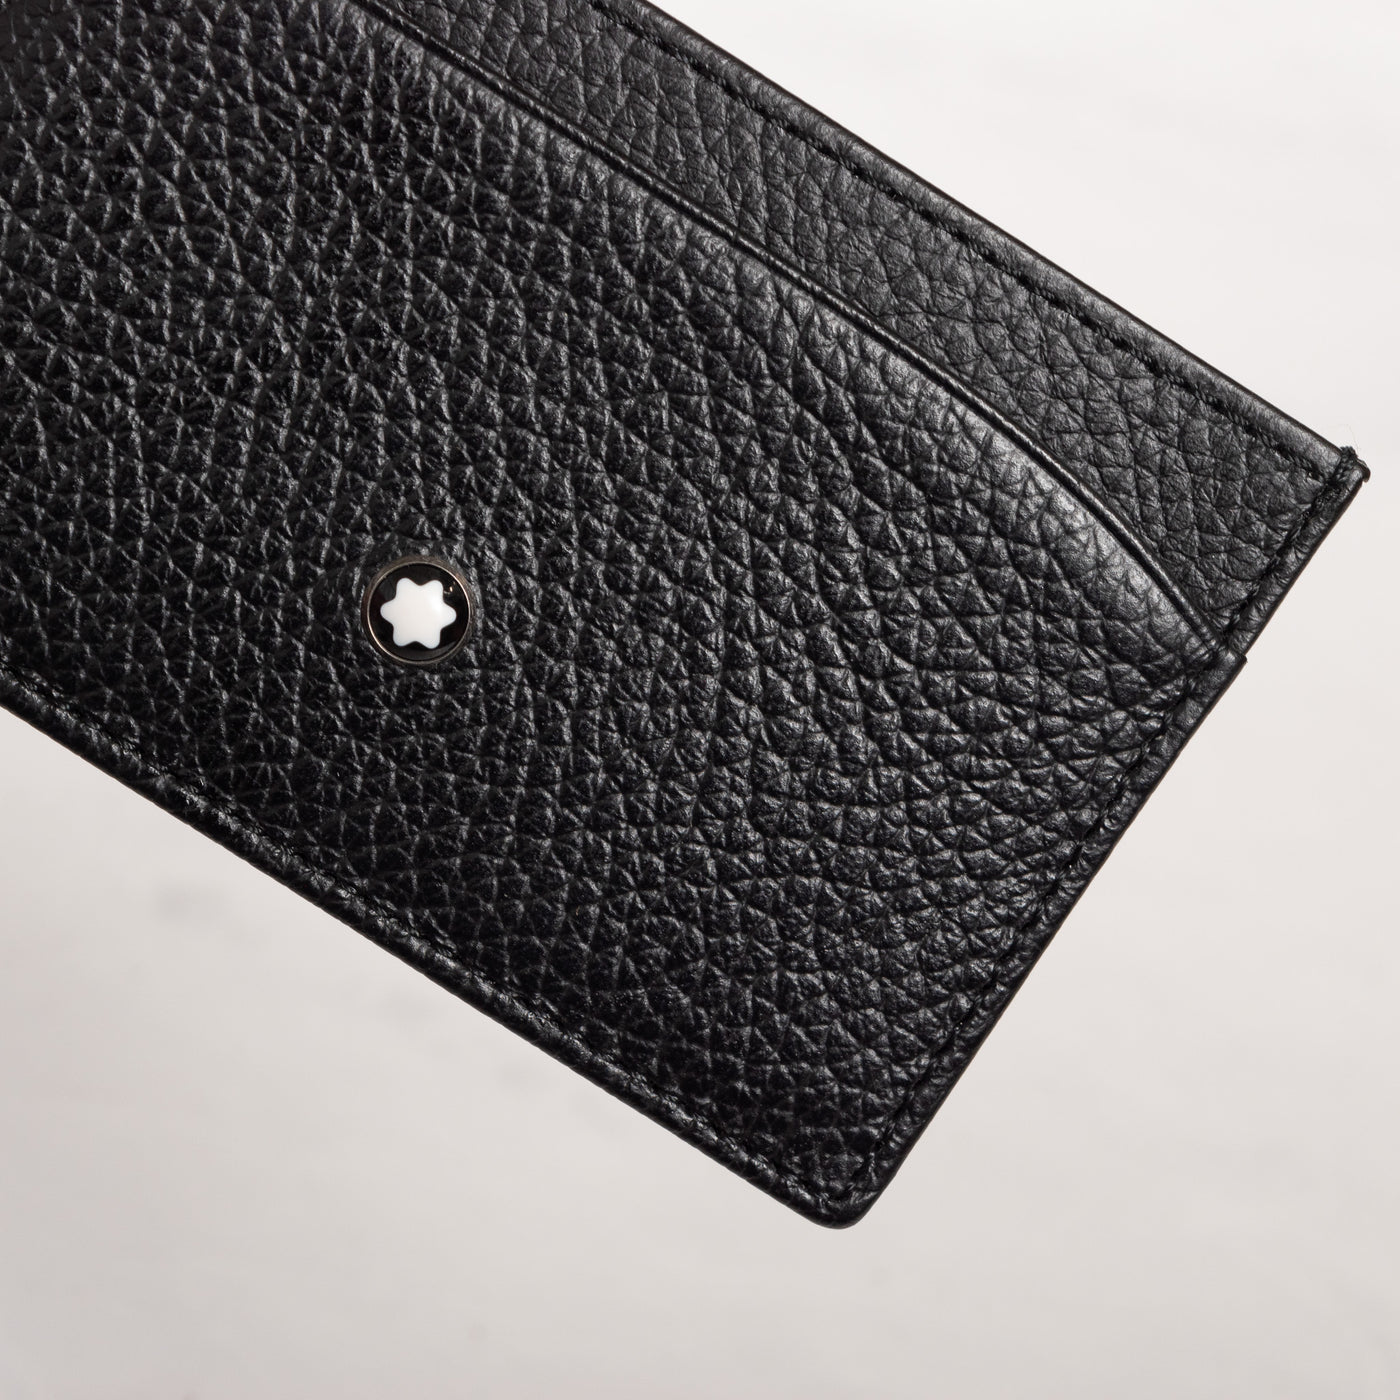 Montblanc Leather Goods Black 3 Card Holder Wallet 114472 soft grain